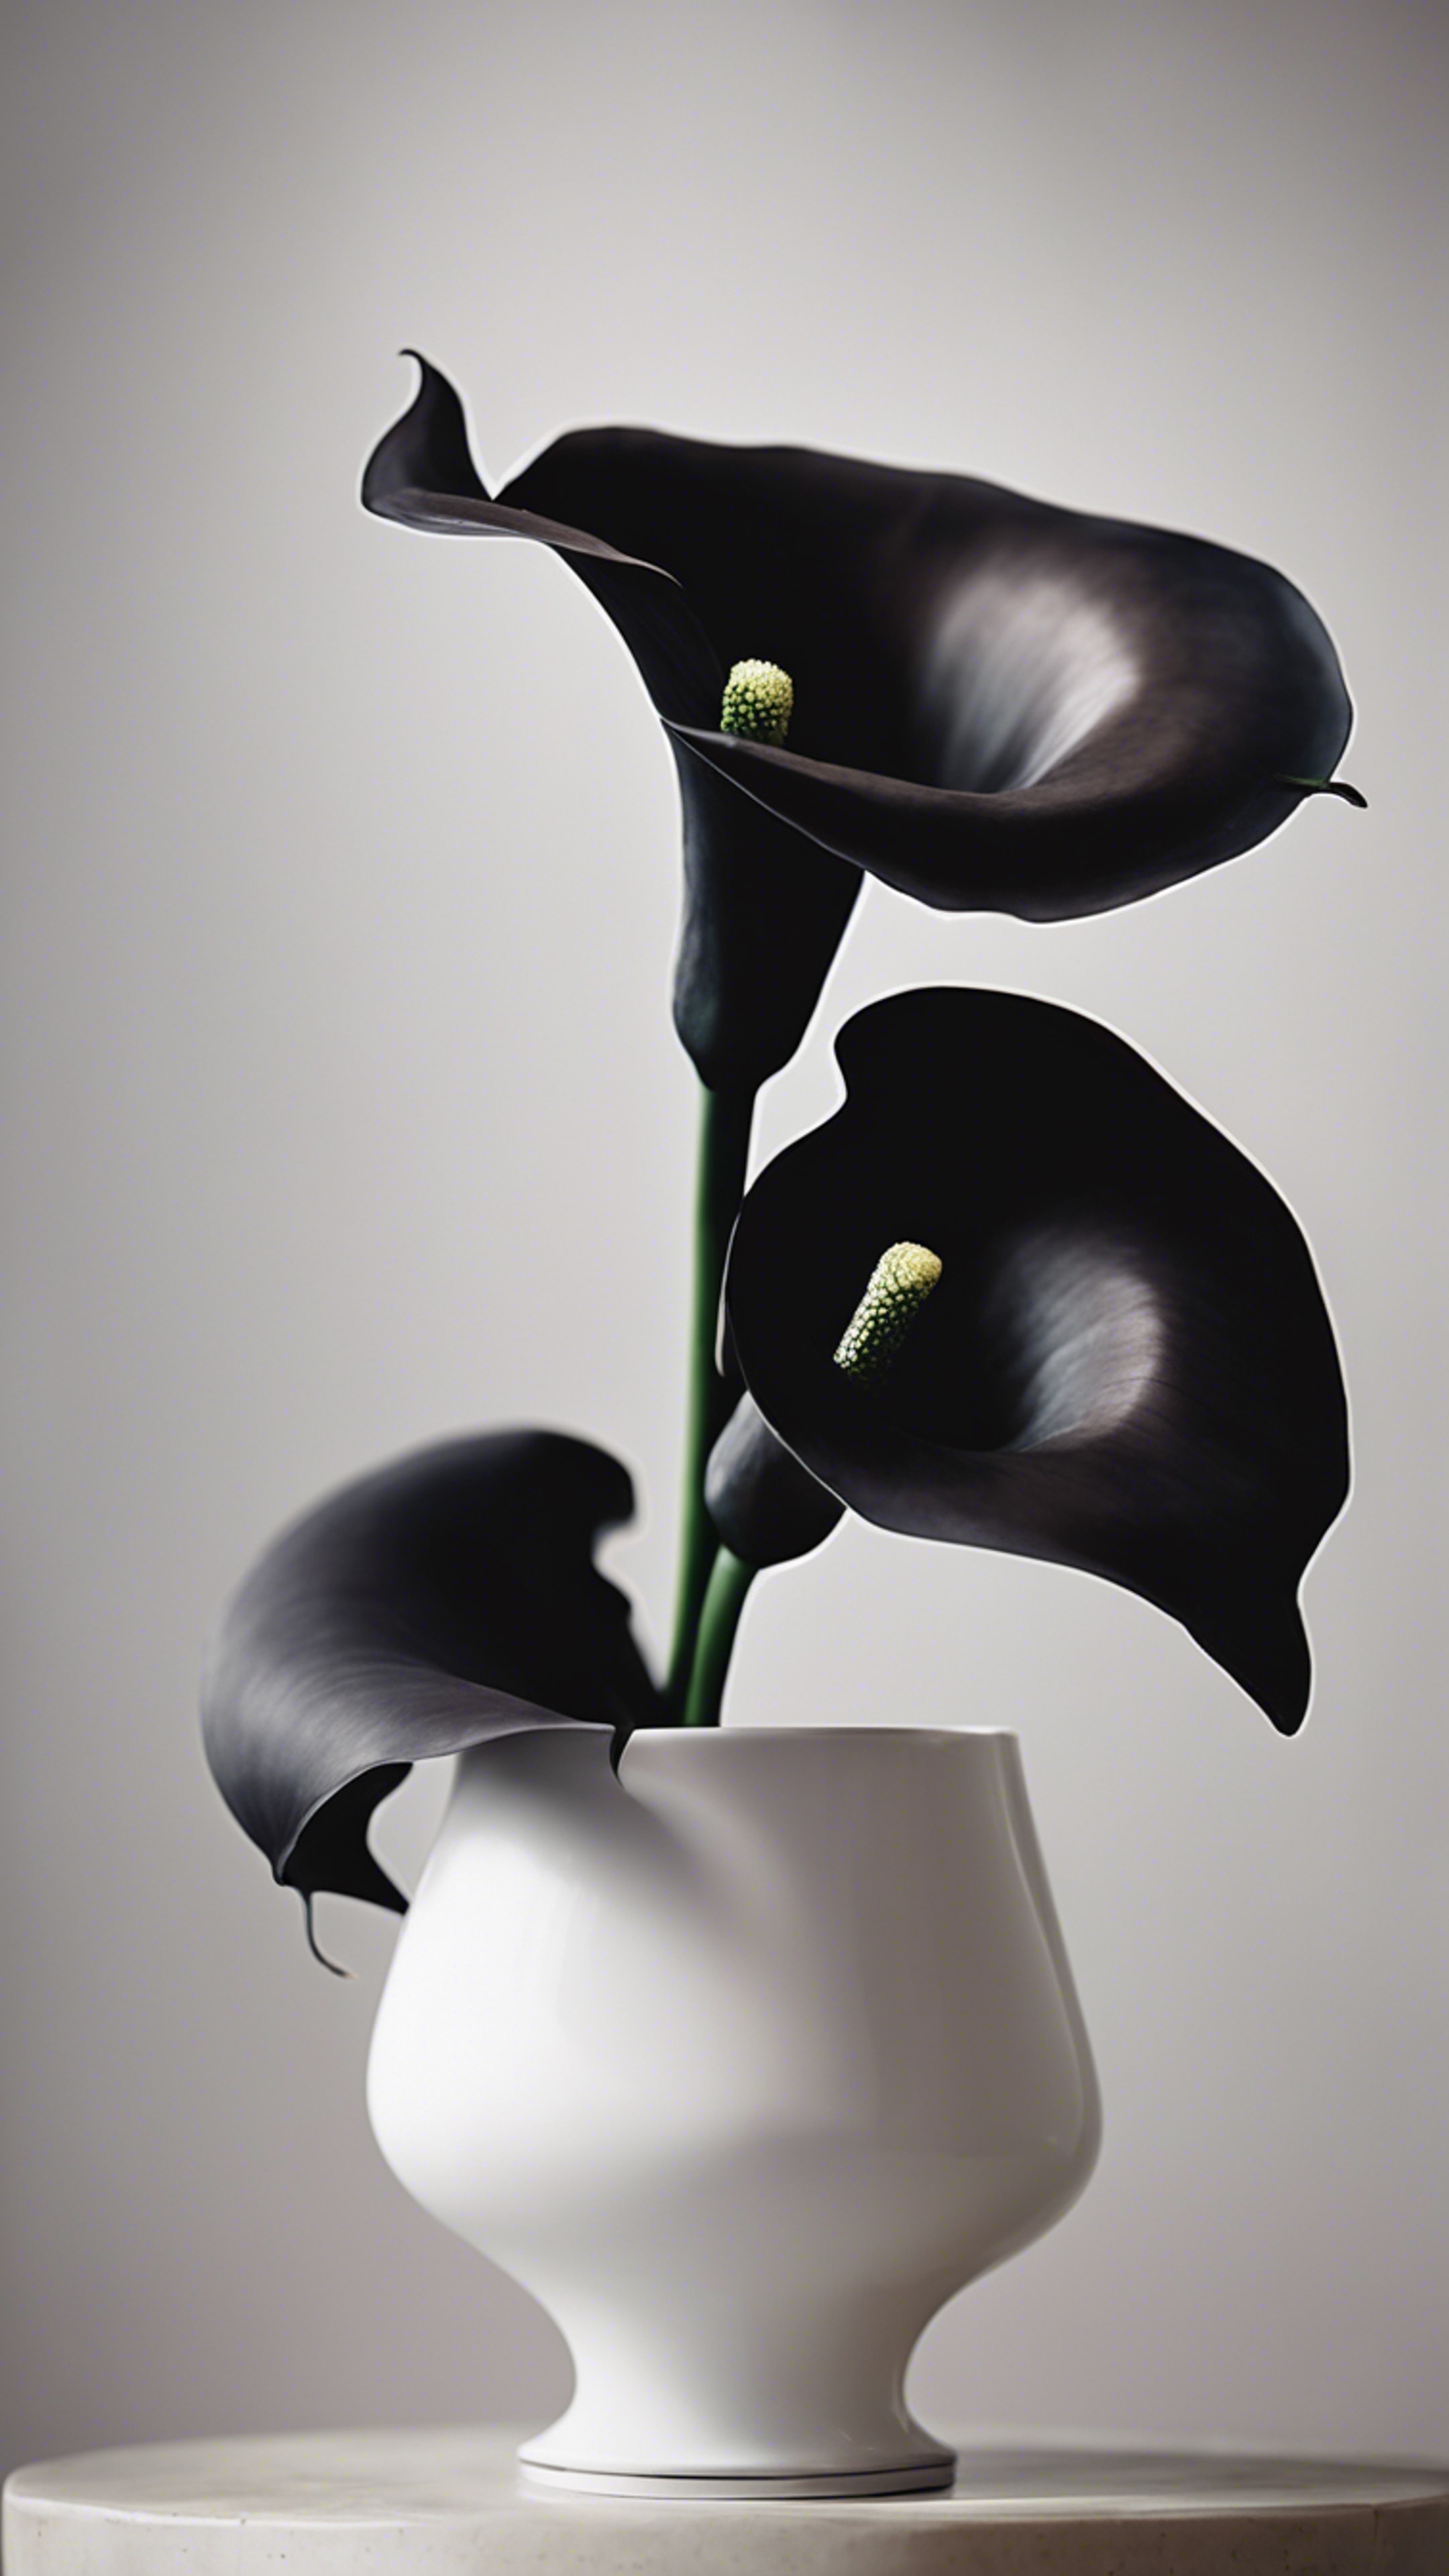 A breathtaking centerpiece featuring a black calla lily in a modern white vase. کاغذ دیواری[9d5d01b6790e4db4a8d5]